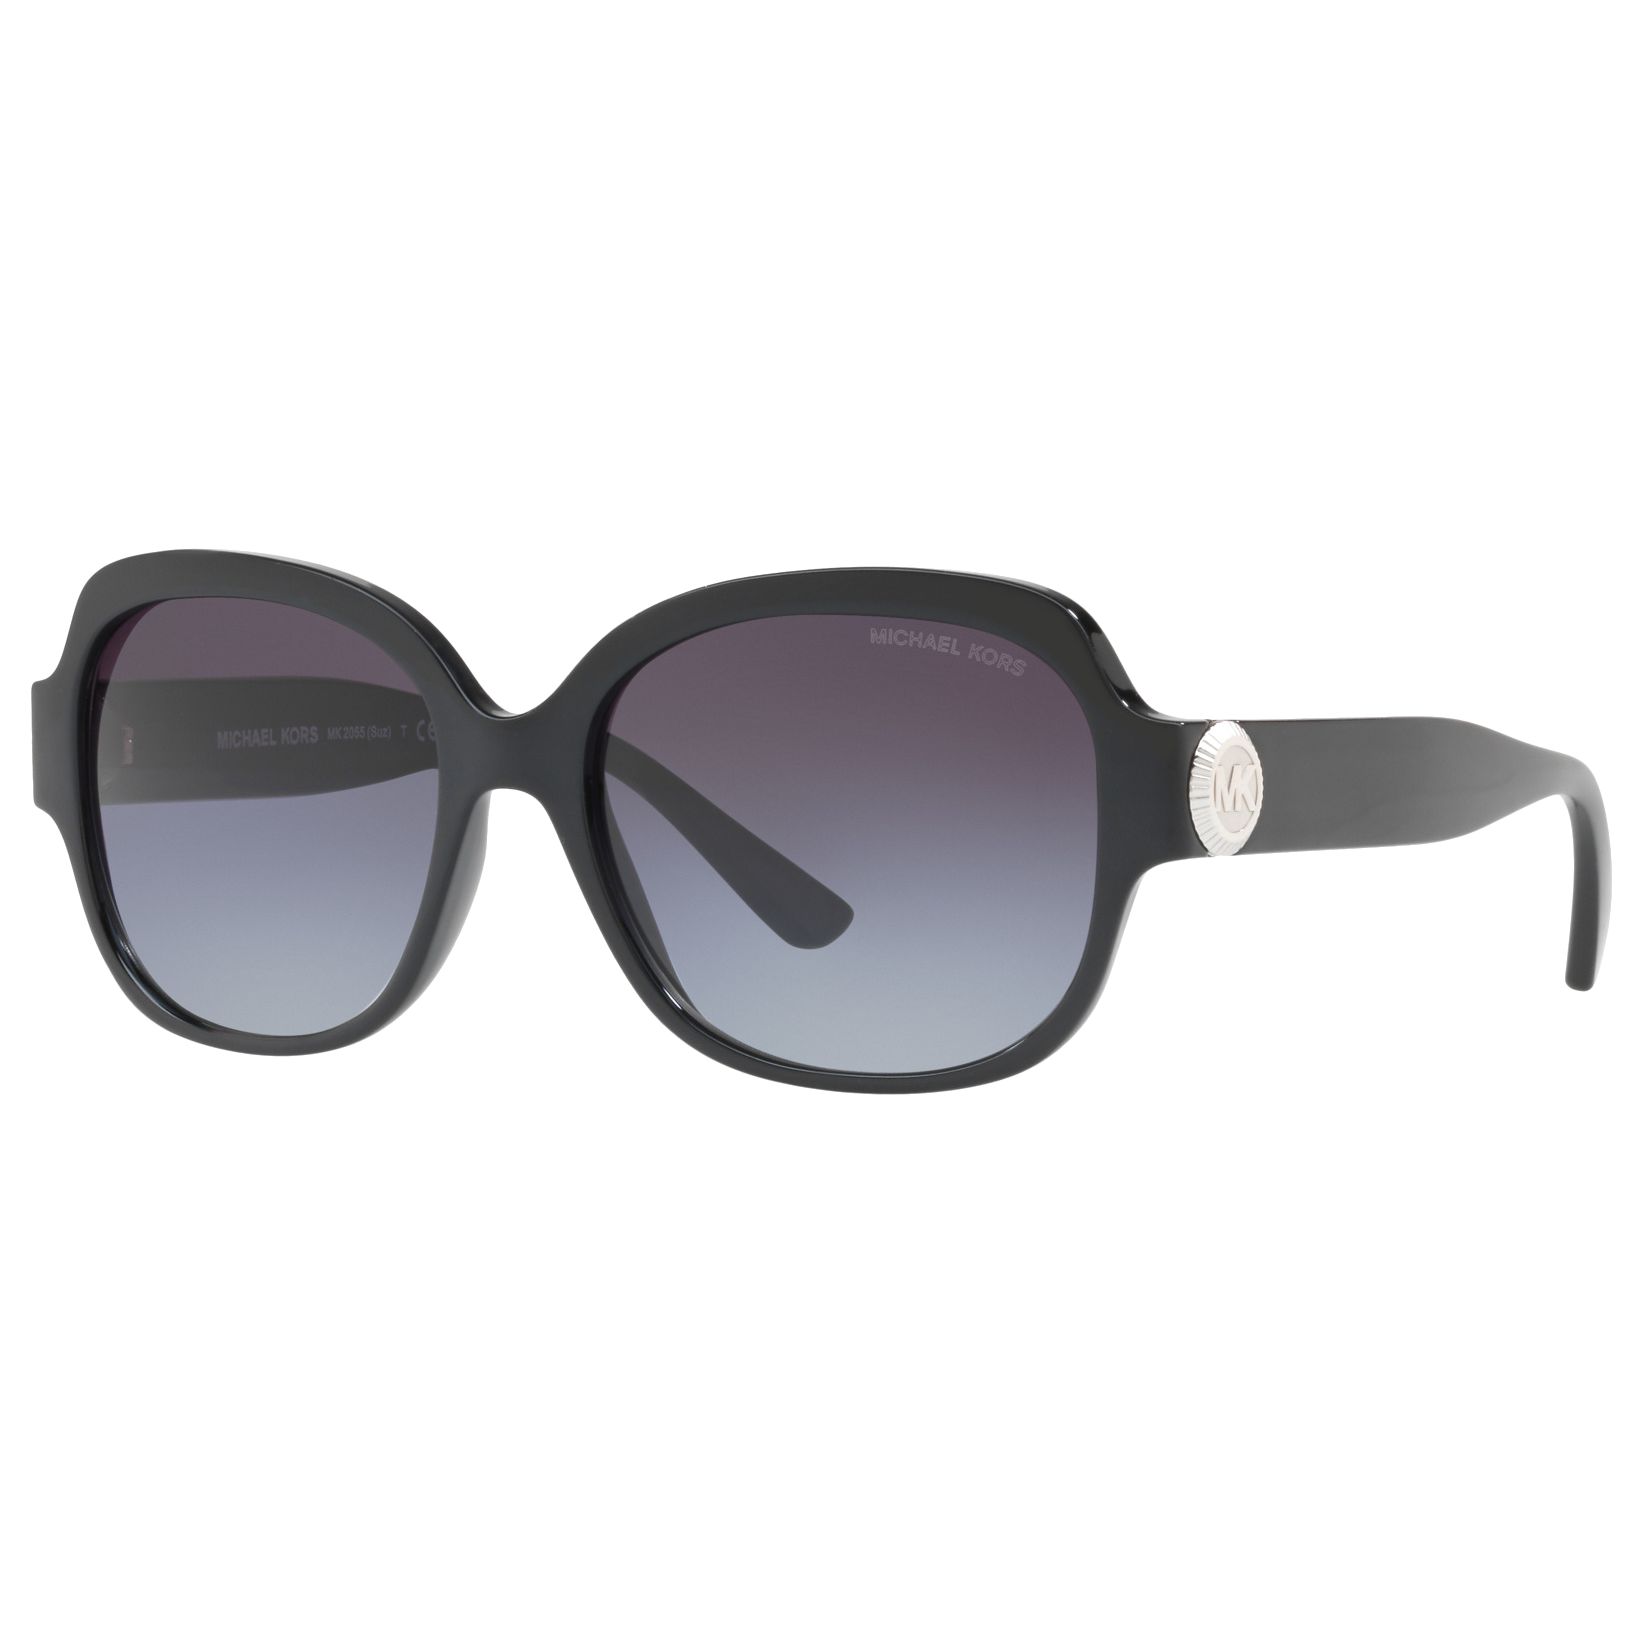 Michael Kors Mk2055 Suz Square Sunglasses Black Grey Gradient At John